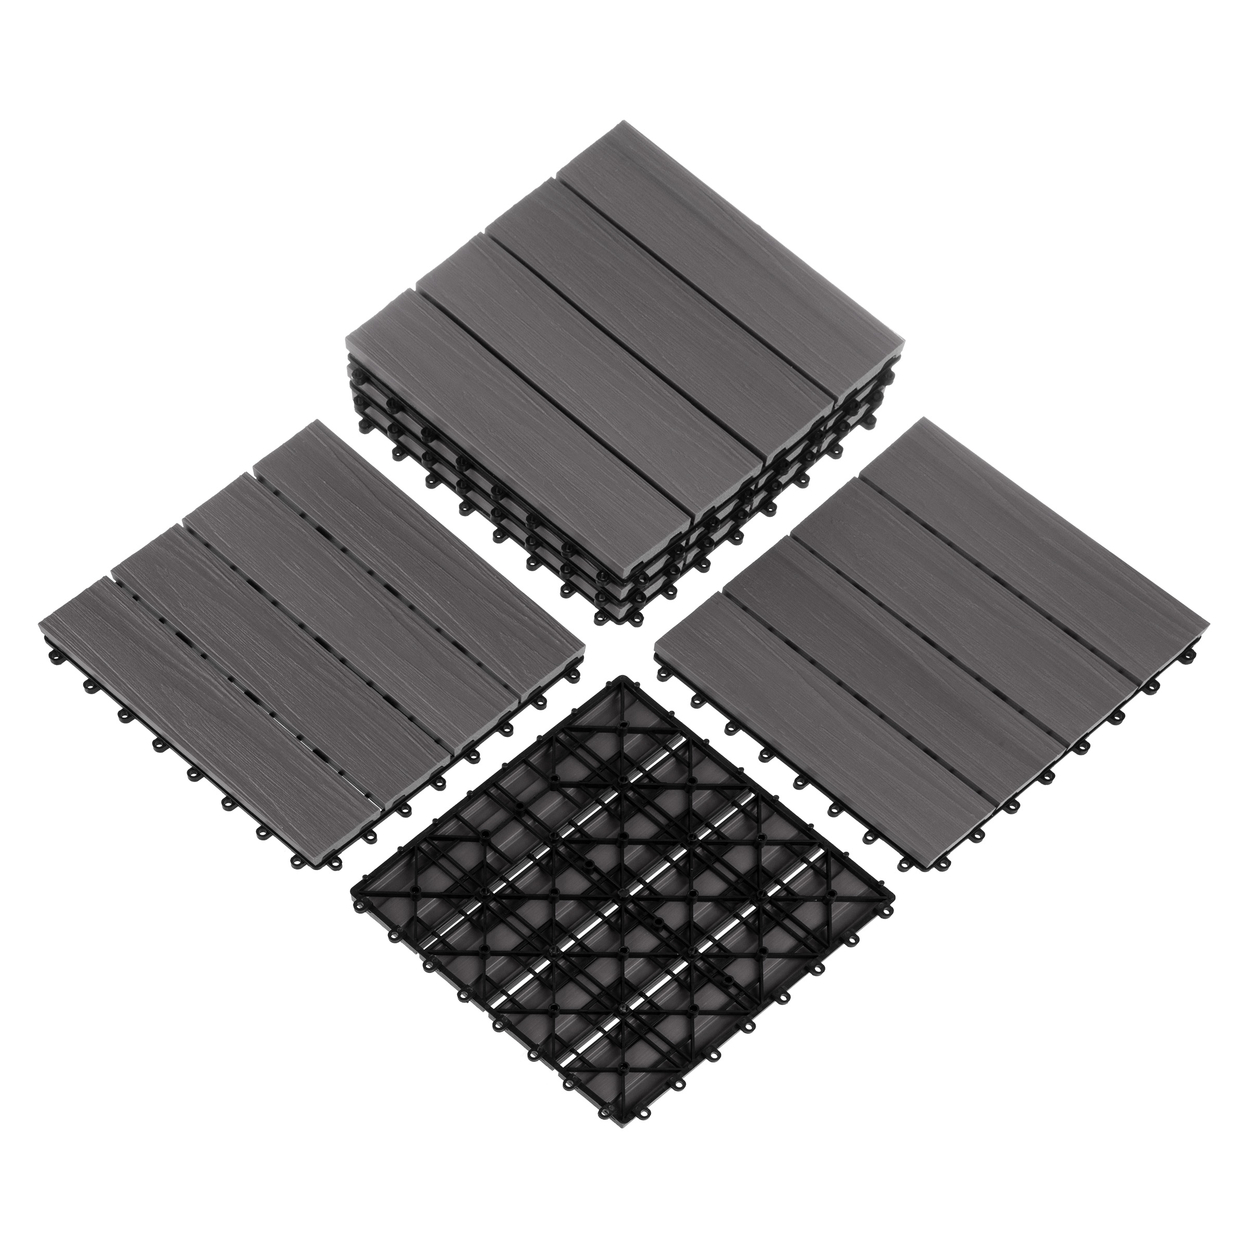 6 Sets Patio Floor Tiles Wood/Plastic Interlocking Deck Tiles, Gray Woodgrain